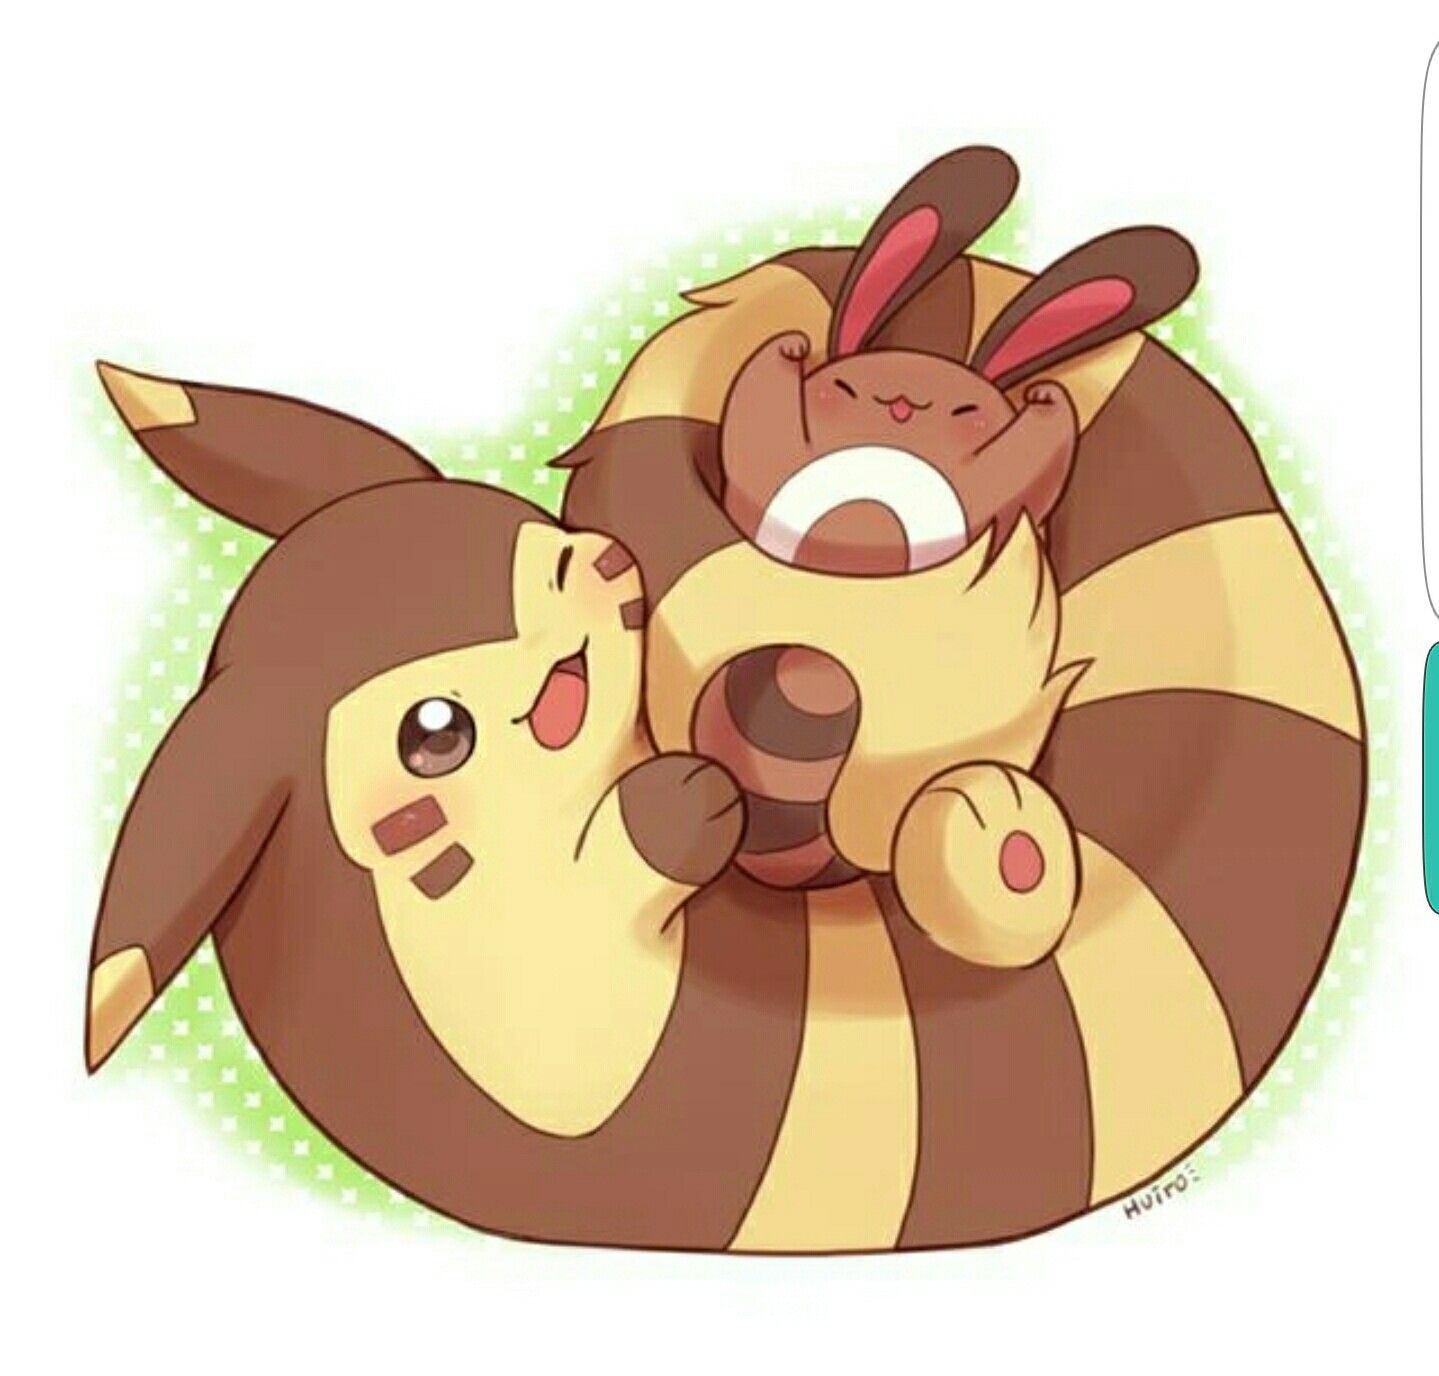 Furret, Sentret, cute; Pokémon Pokémon ポ ケ モ ン Pinterest.